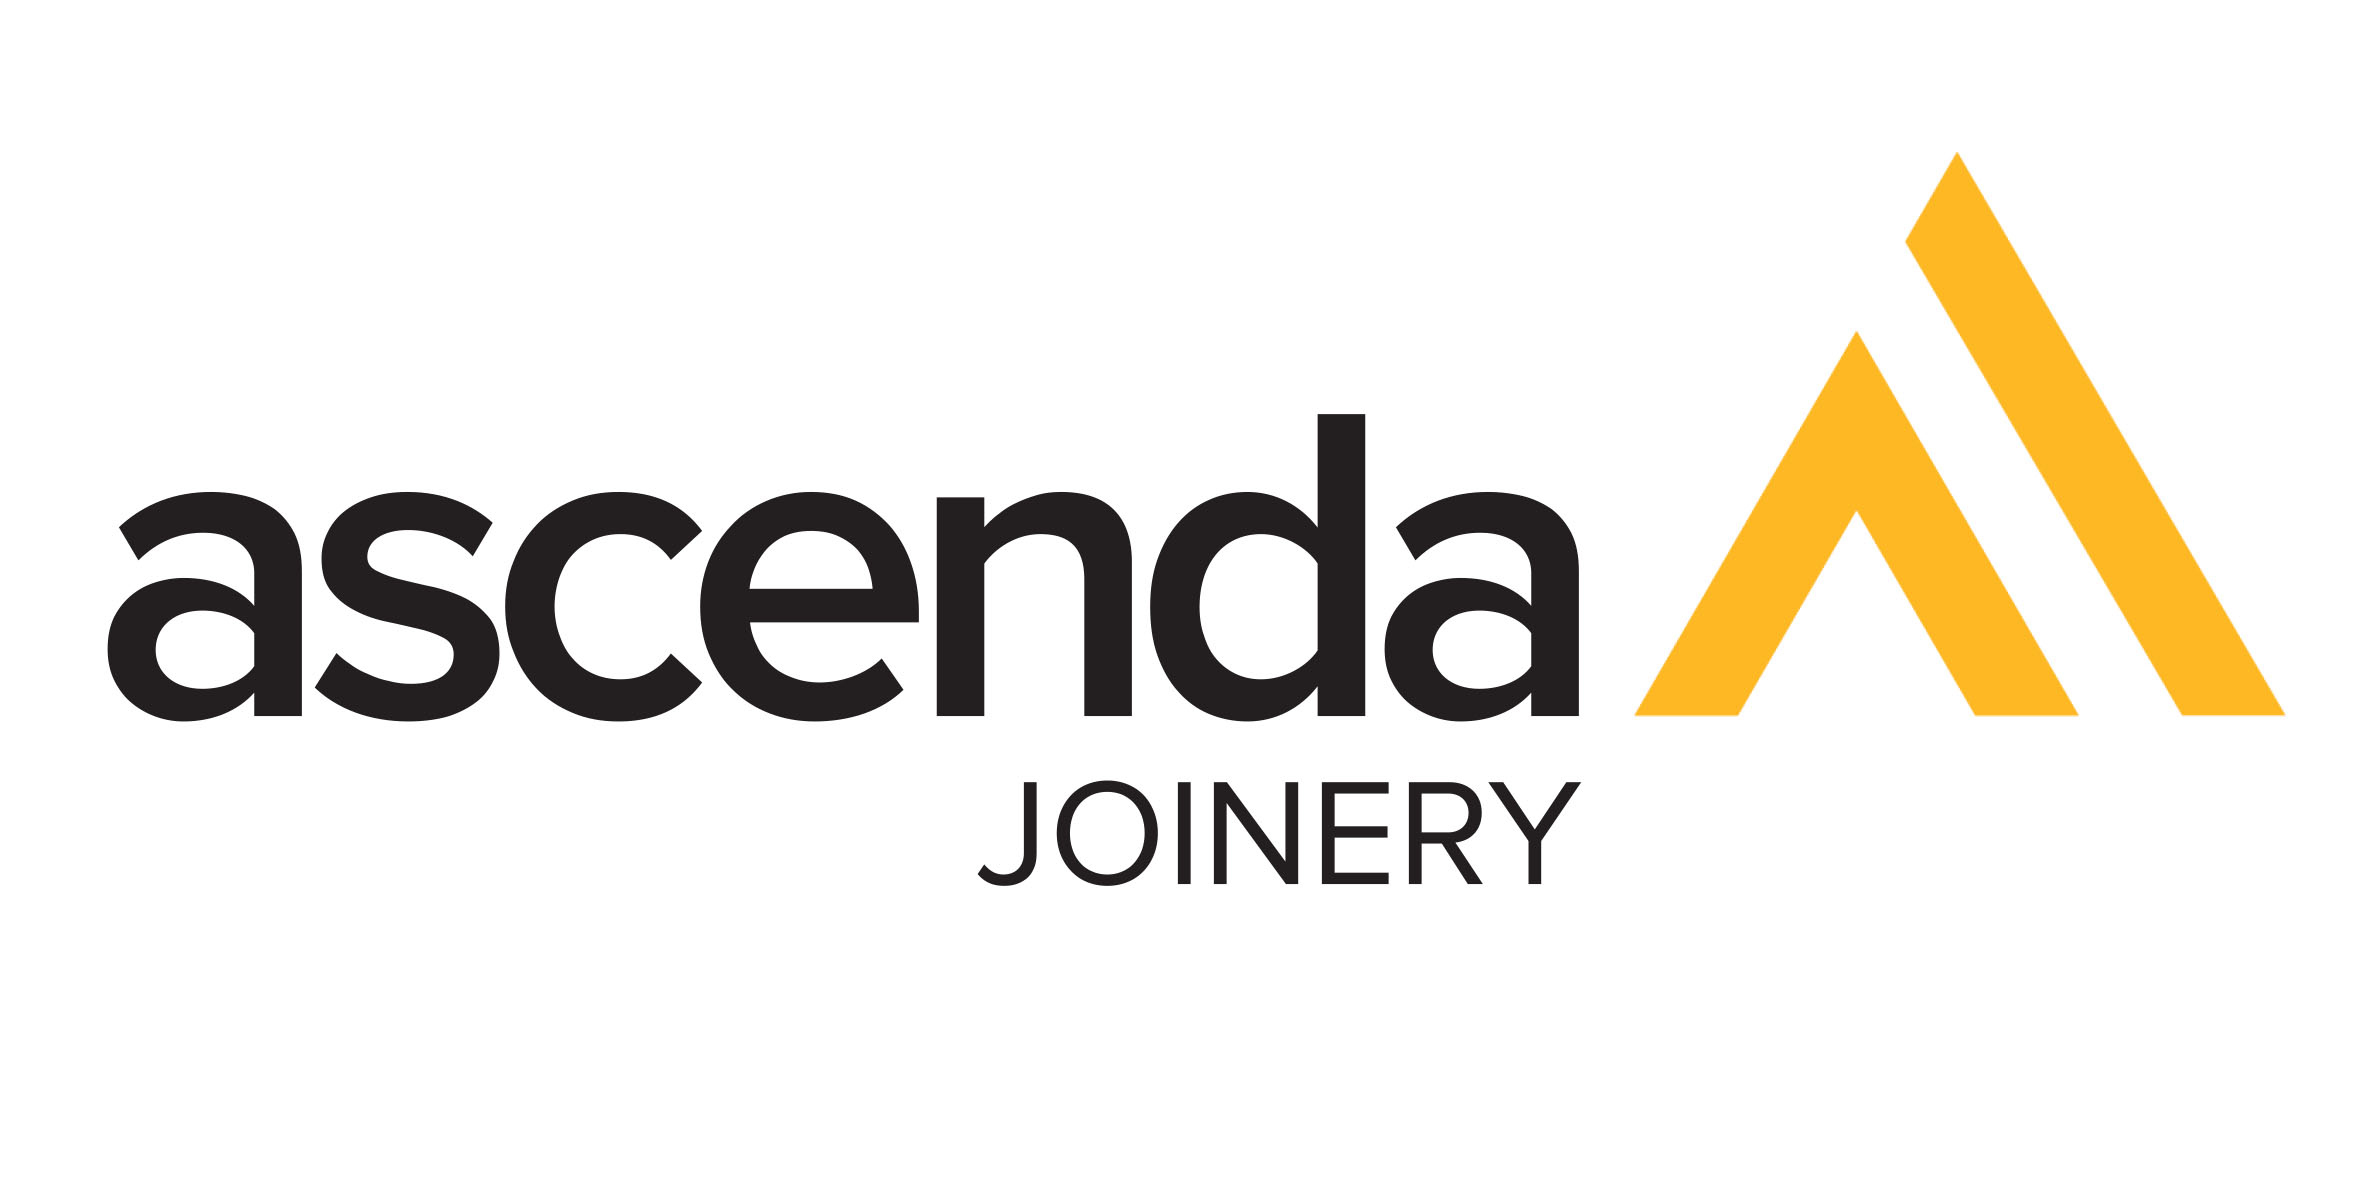 Ascenda Joinery Ltd